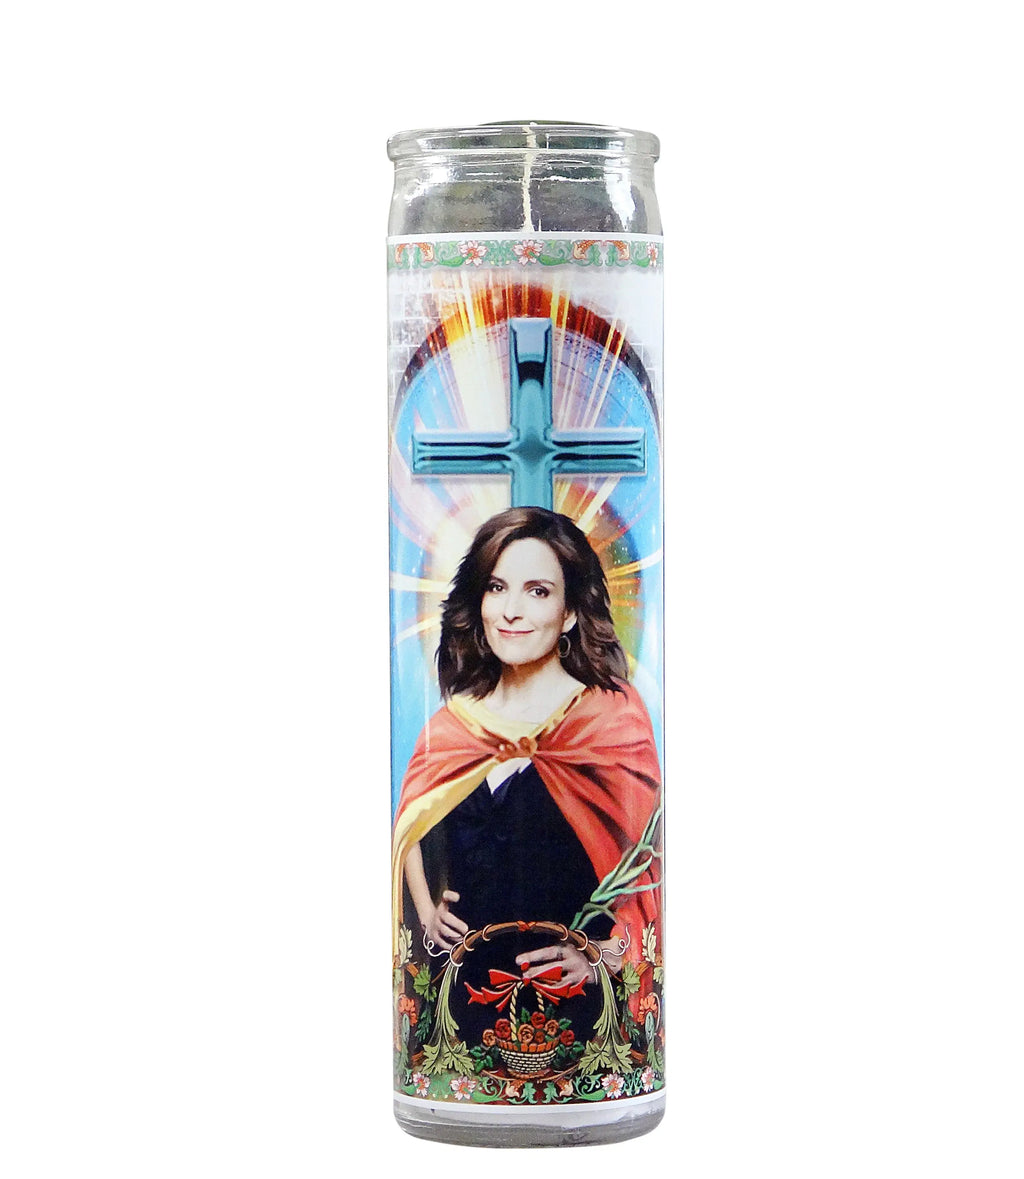 Tina Fey Celebrity Prayer Candle